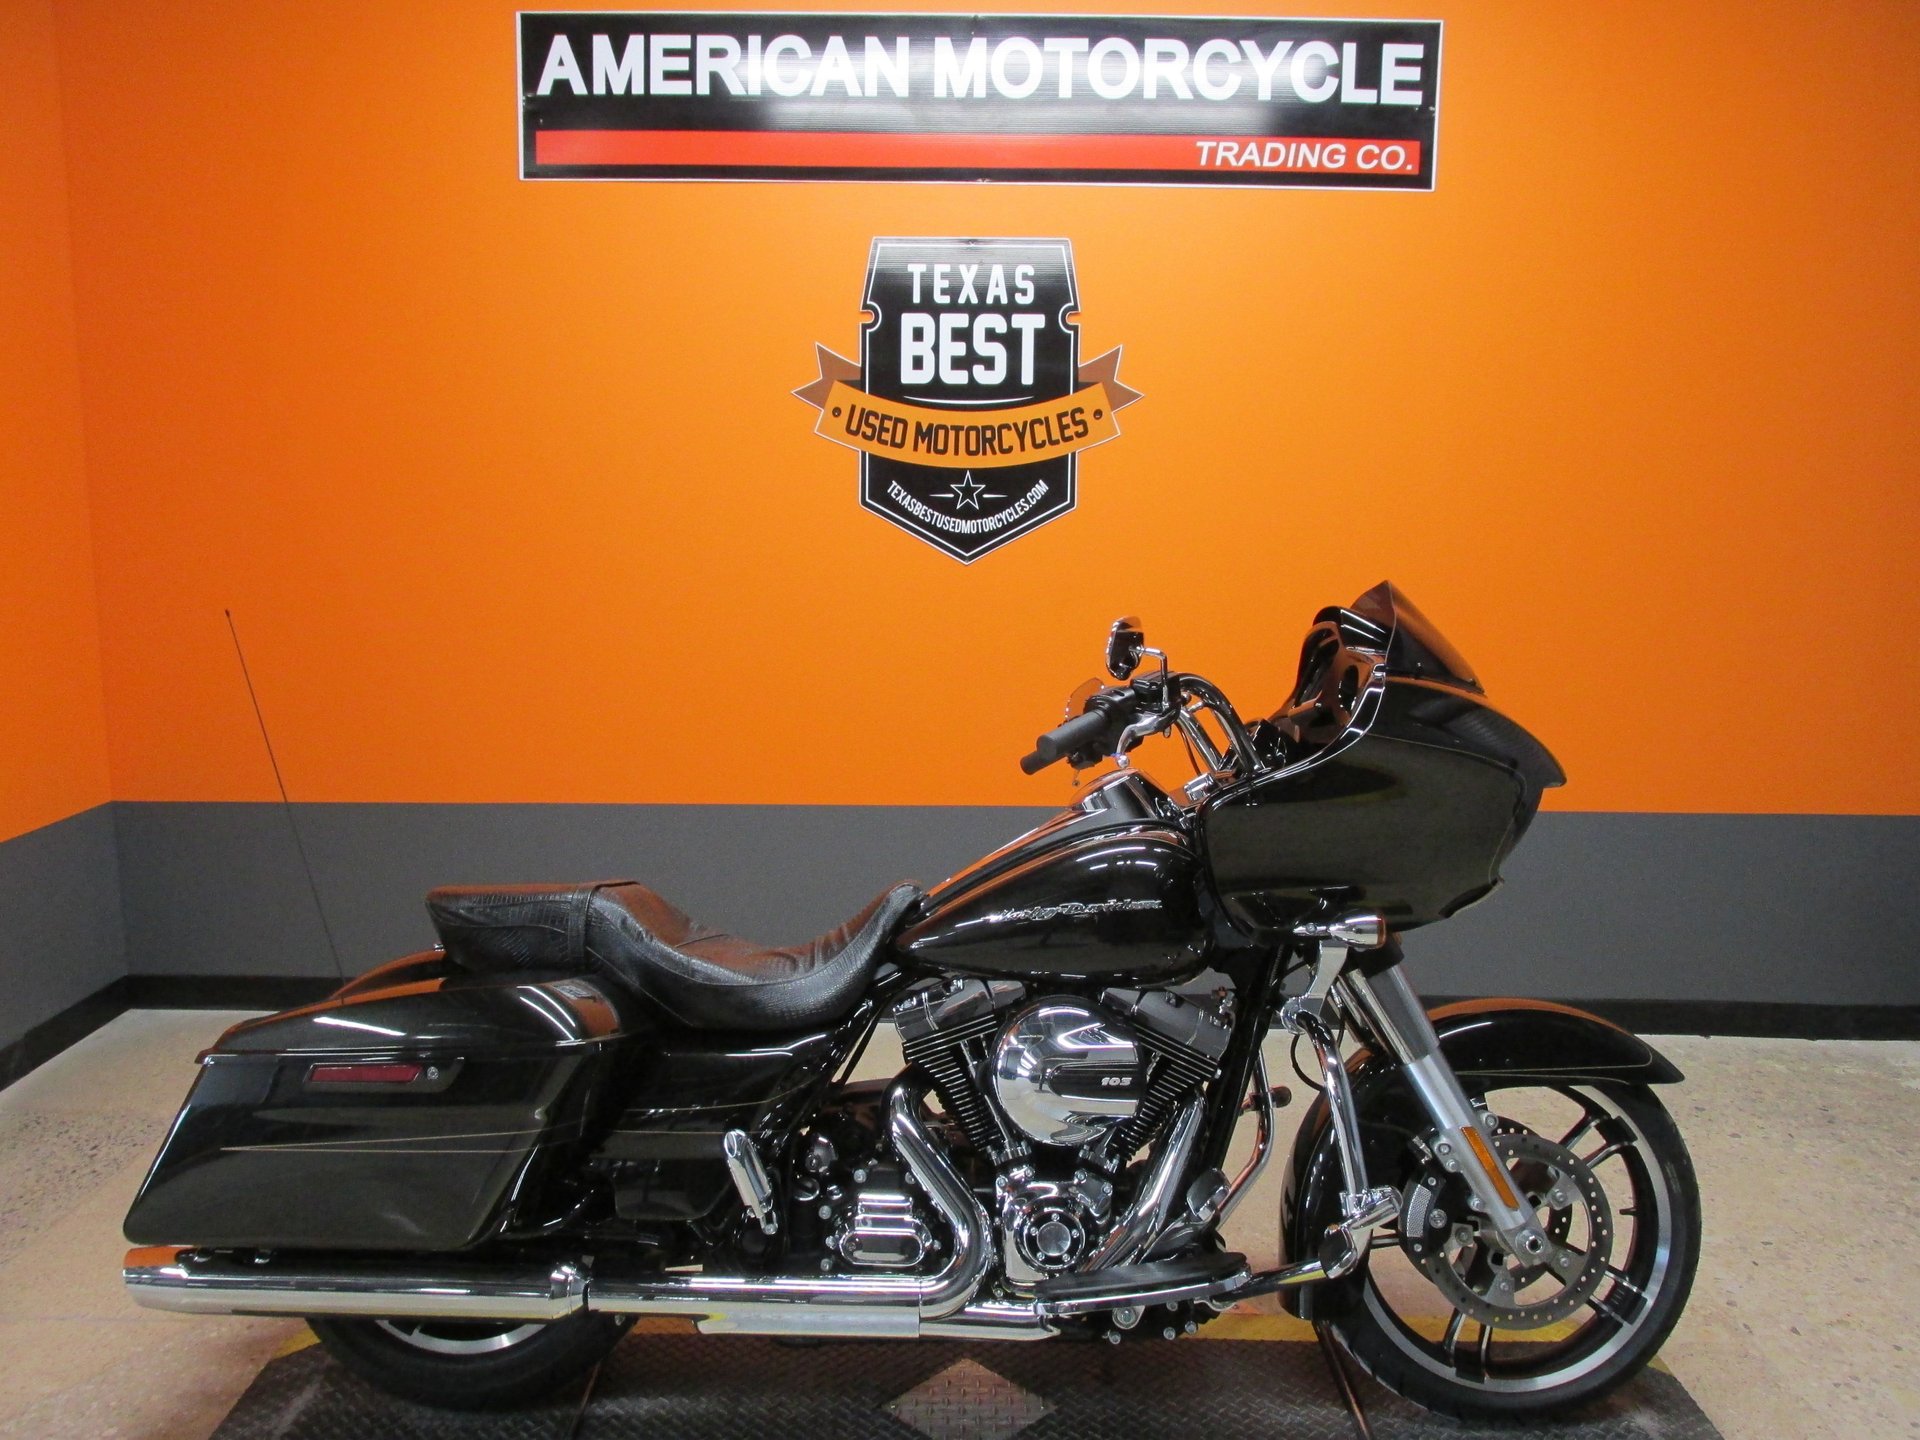 2016 Harley Davidson Road Glide American Motorcycle Trading Company Used Harley Davidson Motorcycles